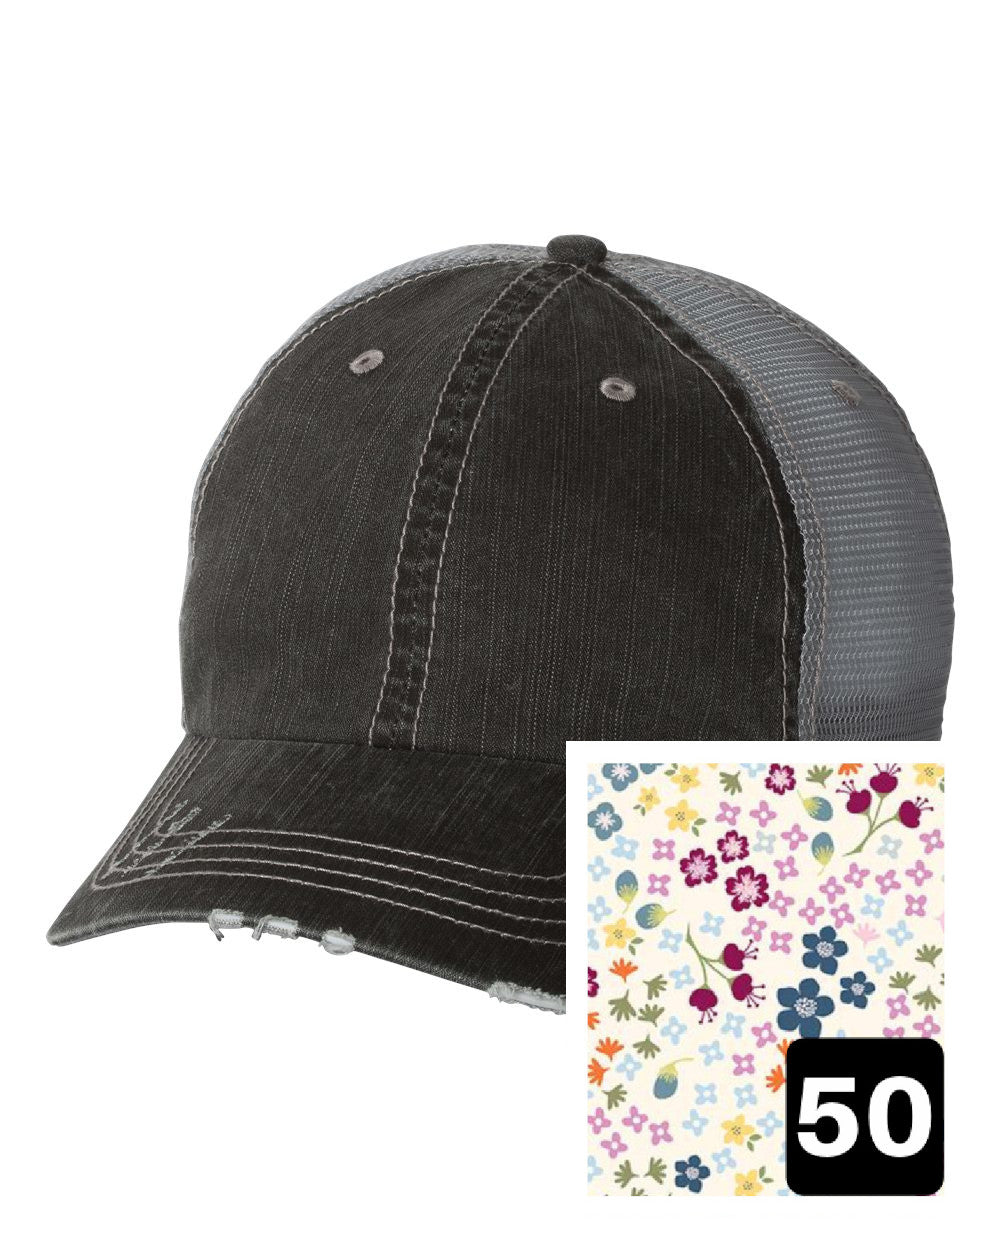 gray distressed trucker hat with gray geometric fabric state of North Dakota